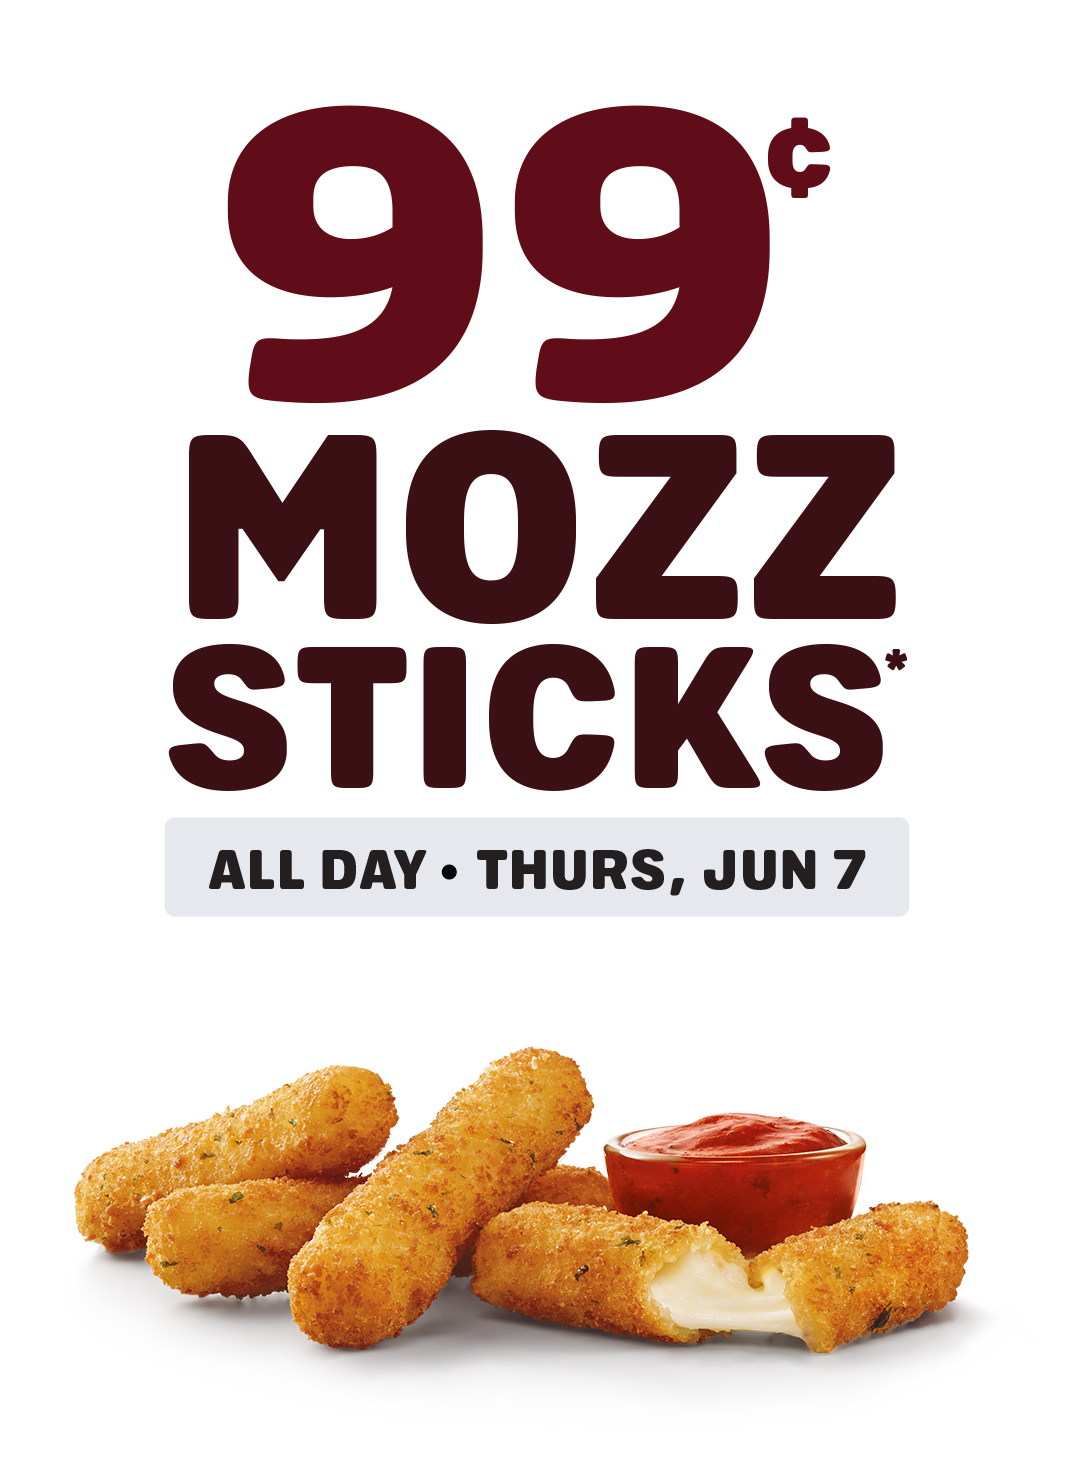 Sonic Offering Mozzarella Sticks for 99 Cents on Thursday, June 7th